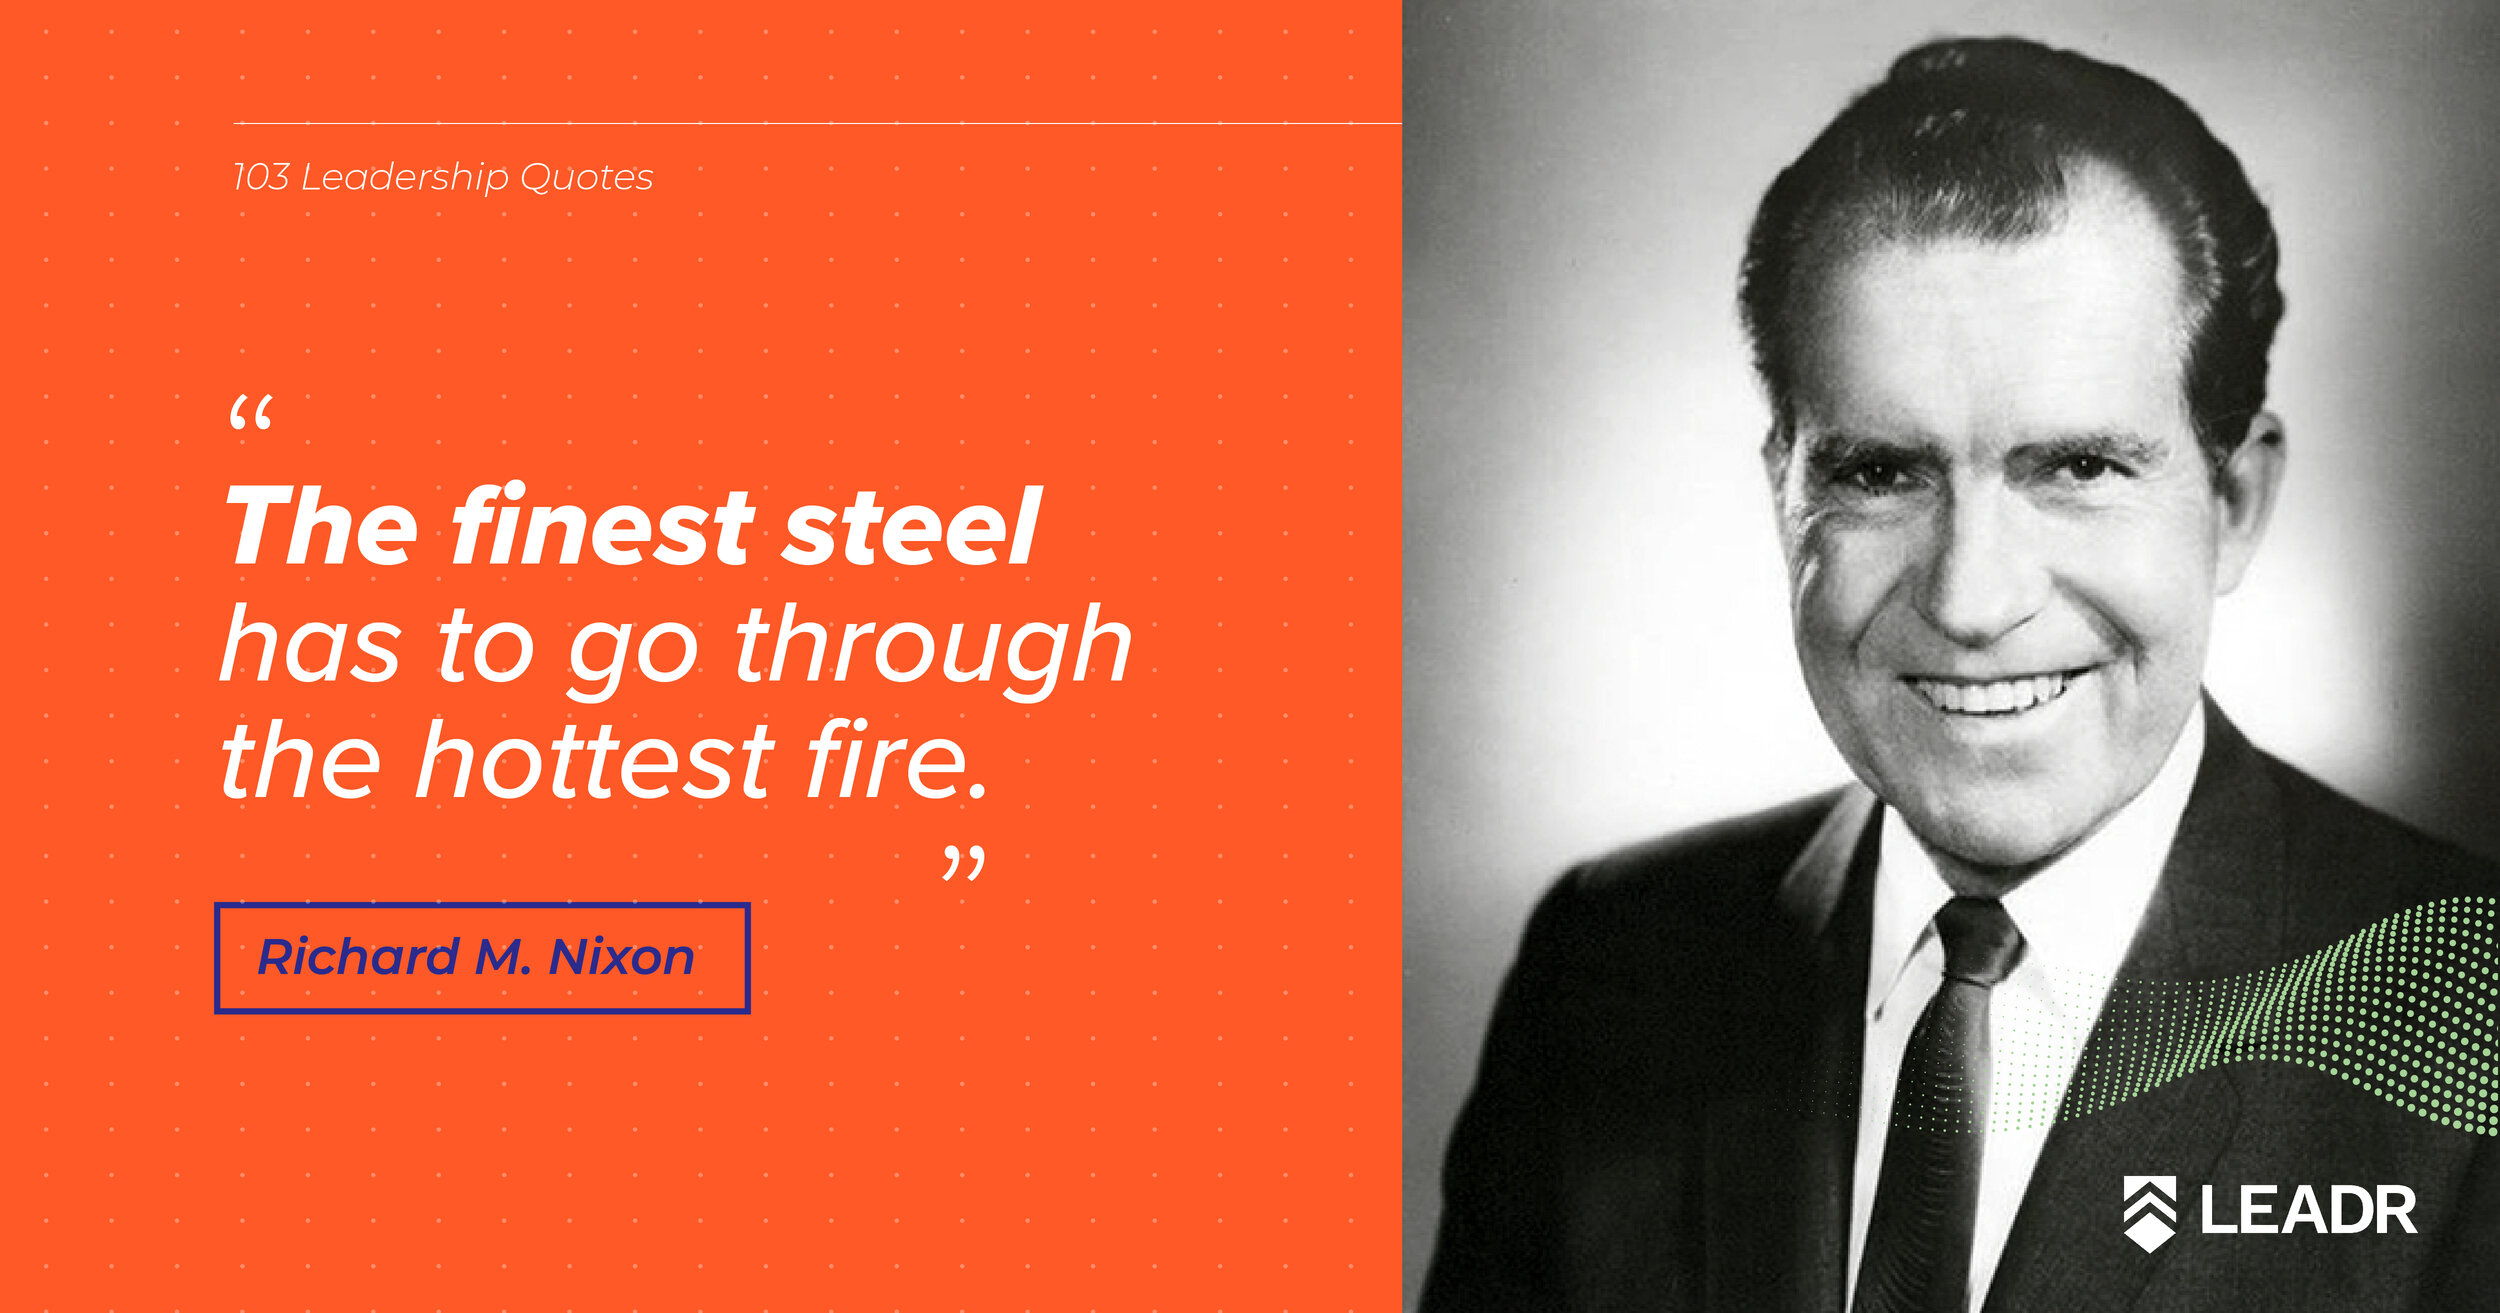 Royalty free downloadable leadership quotes - Richard Nixon